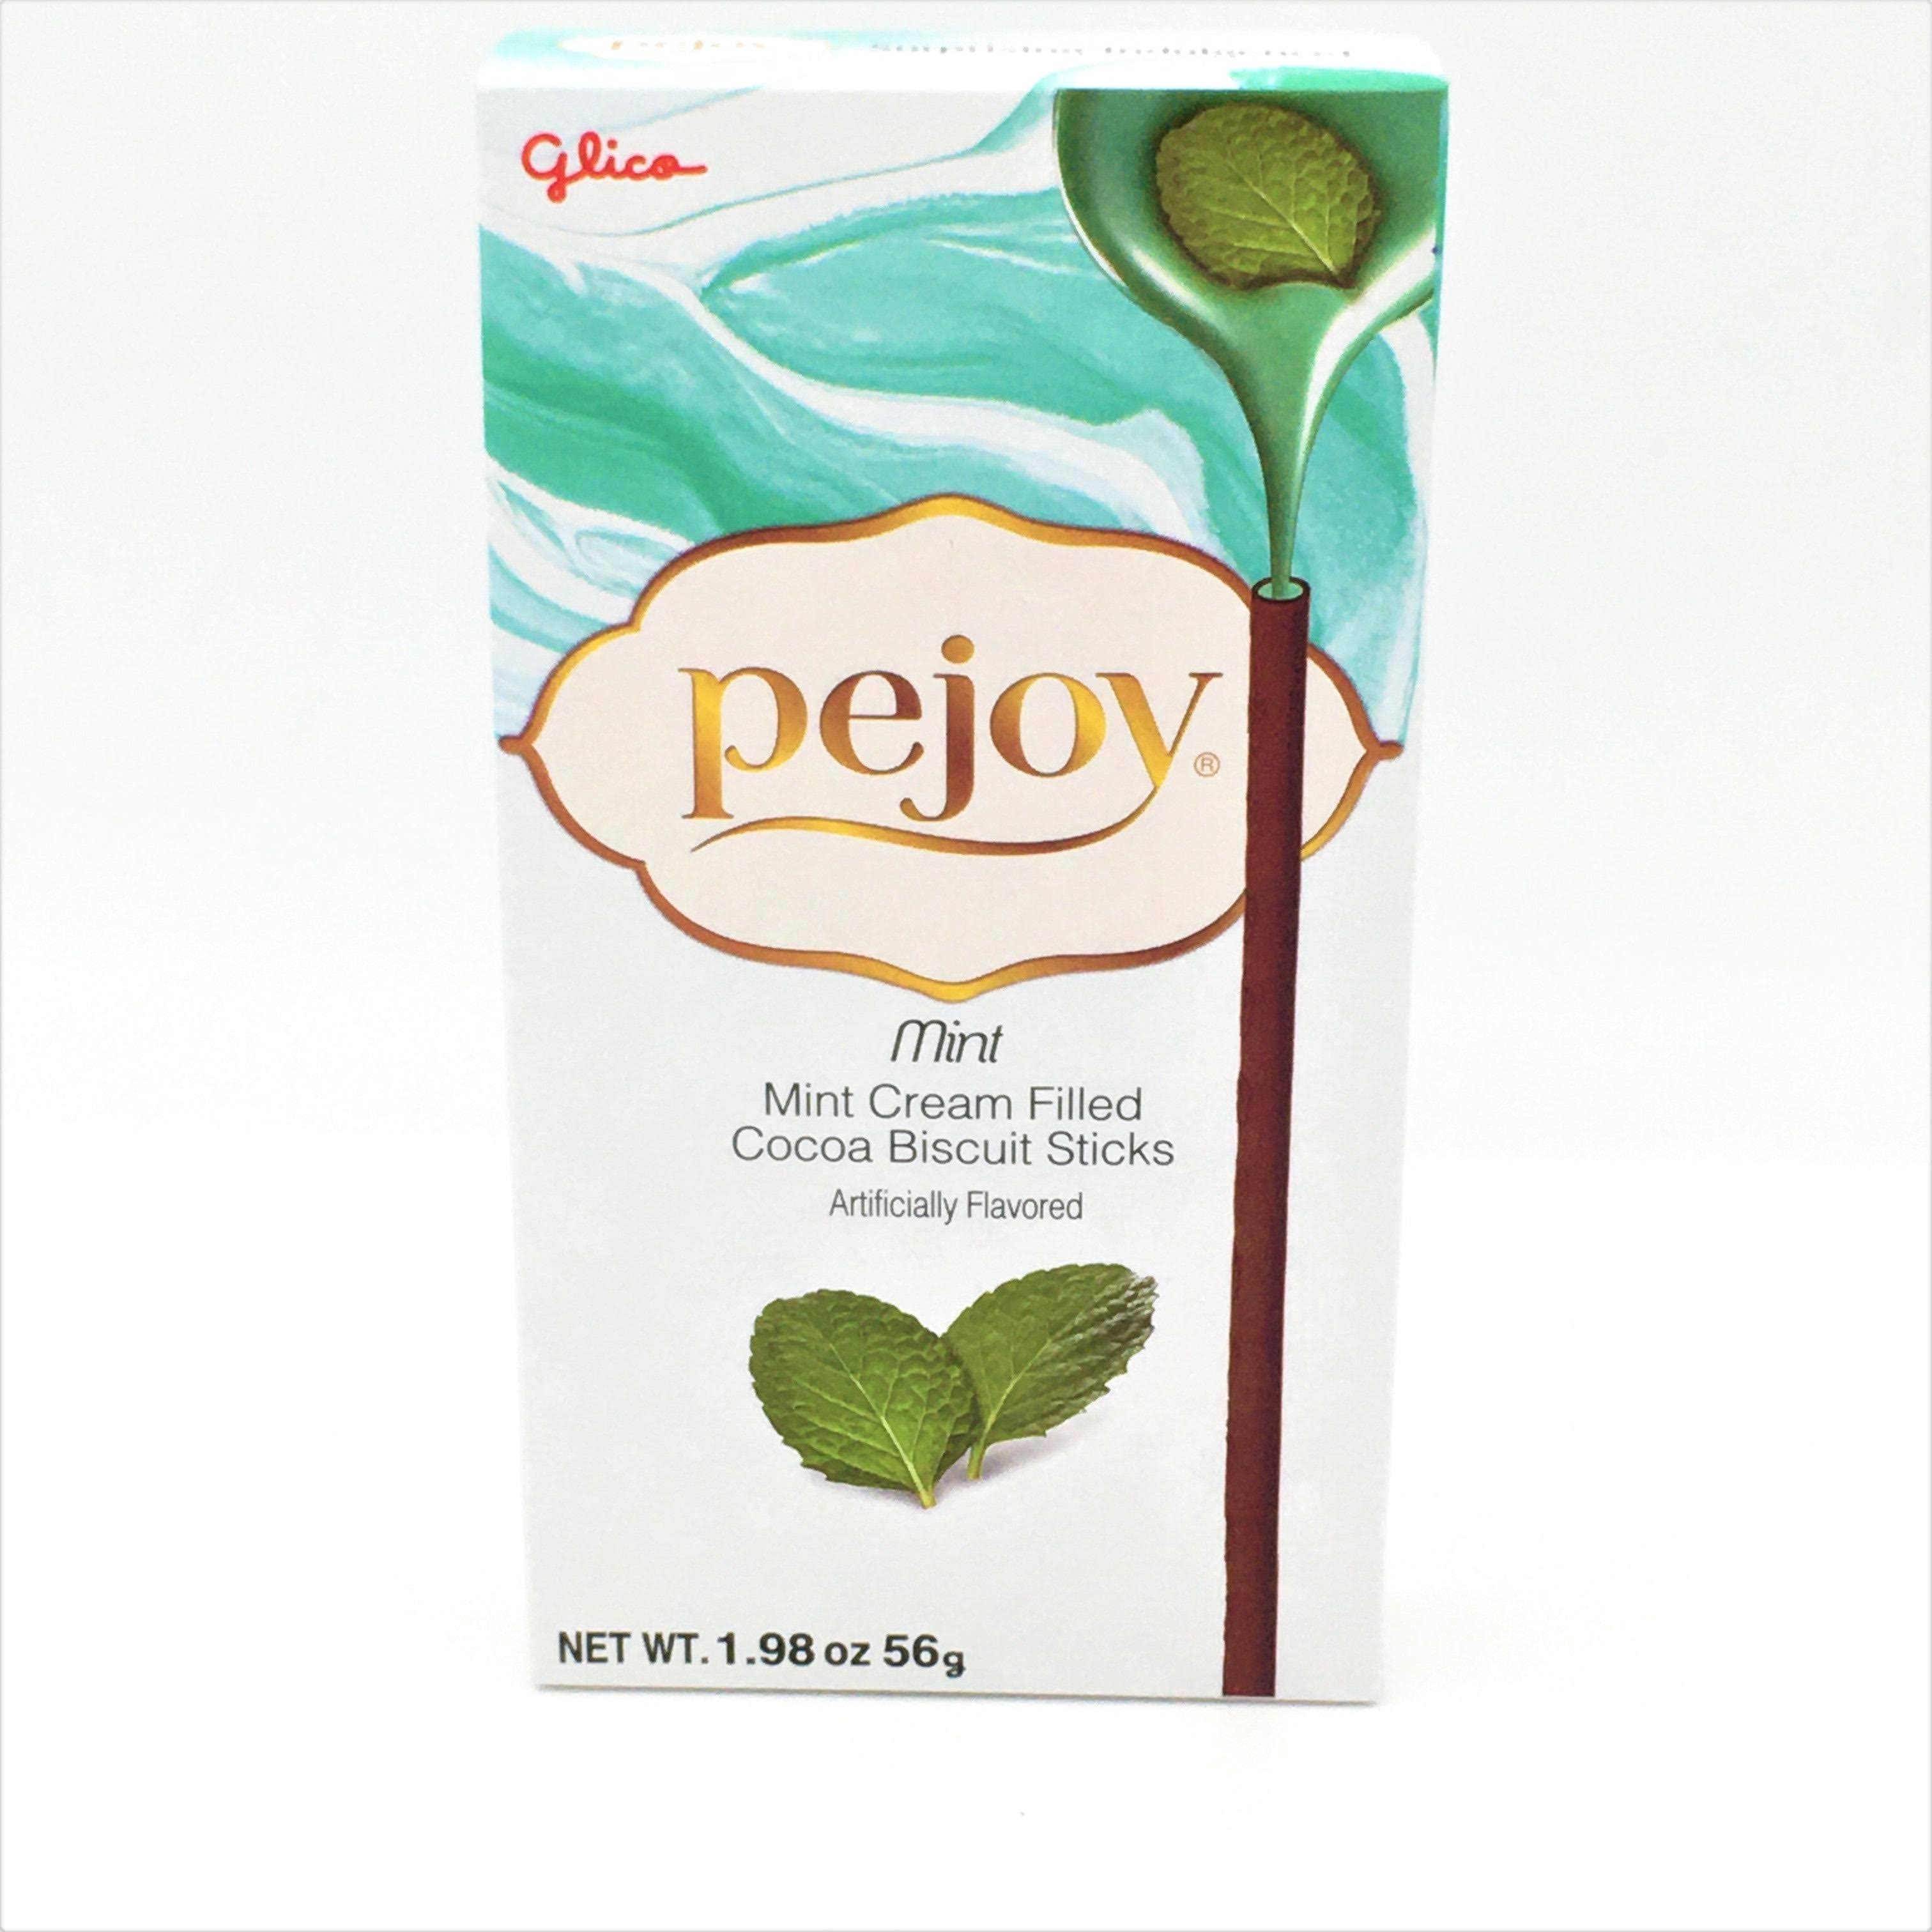 Glico Pejoy Mint Cream Filled Cocoa Biscuit Sticks - 1.98oz